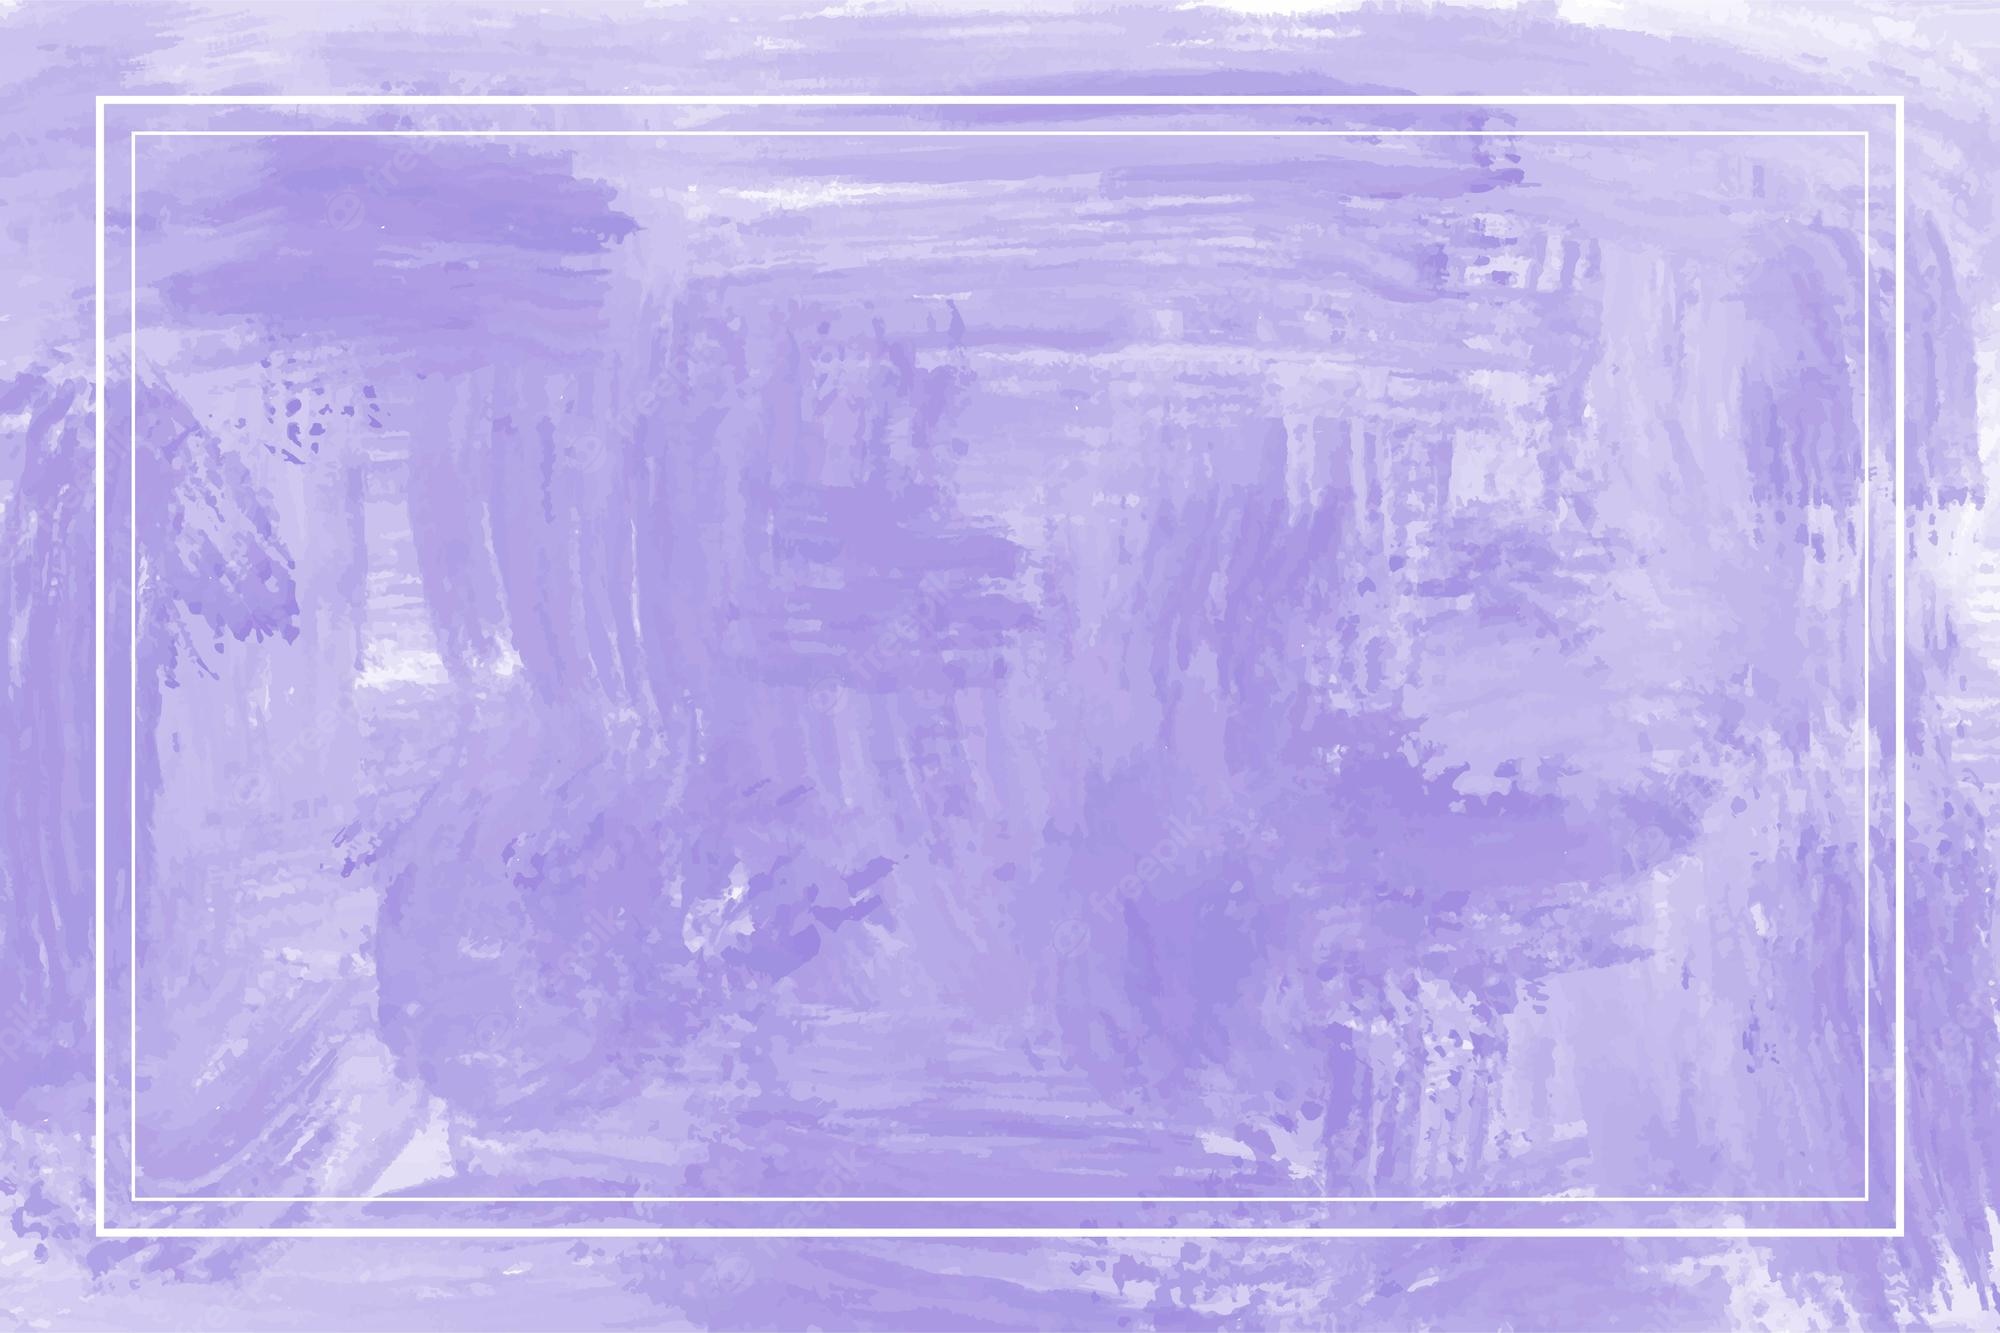 Pastel Purple Background Image. Free Vectors, & PSD